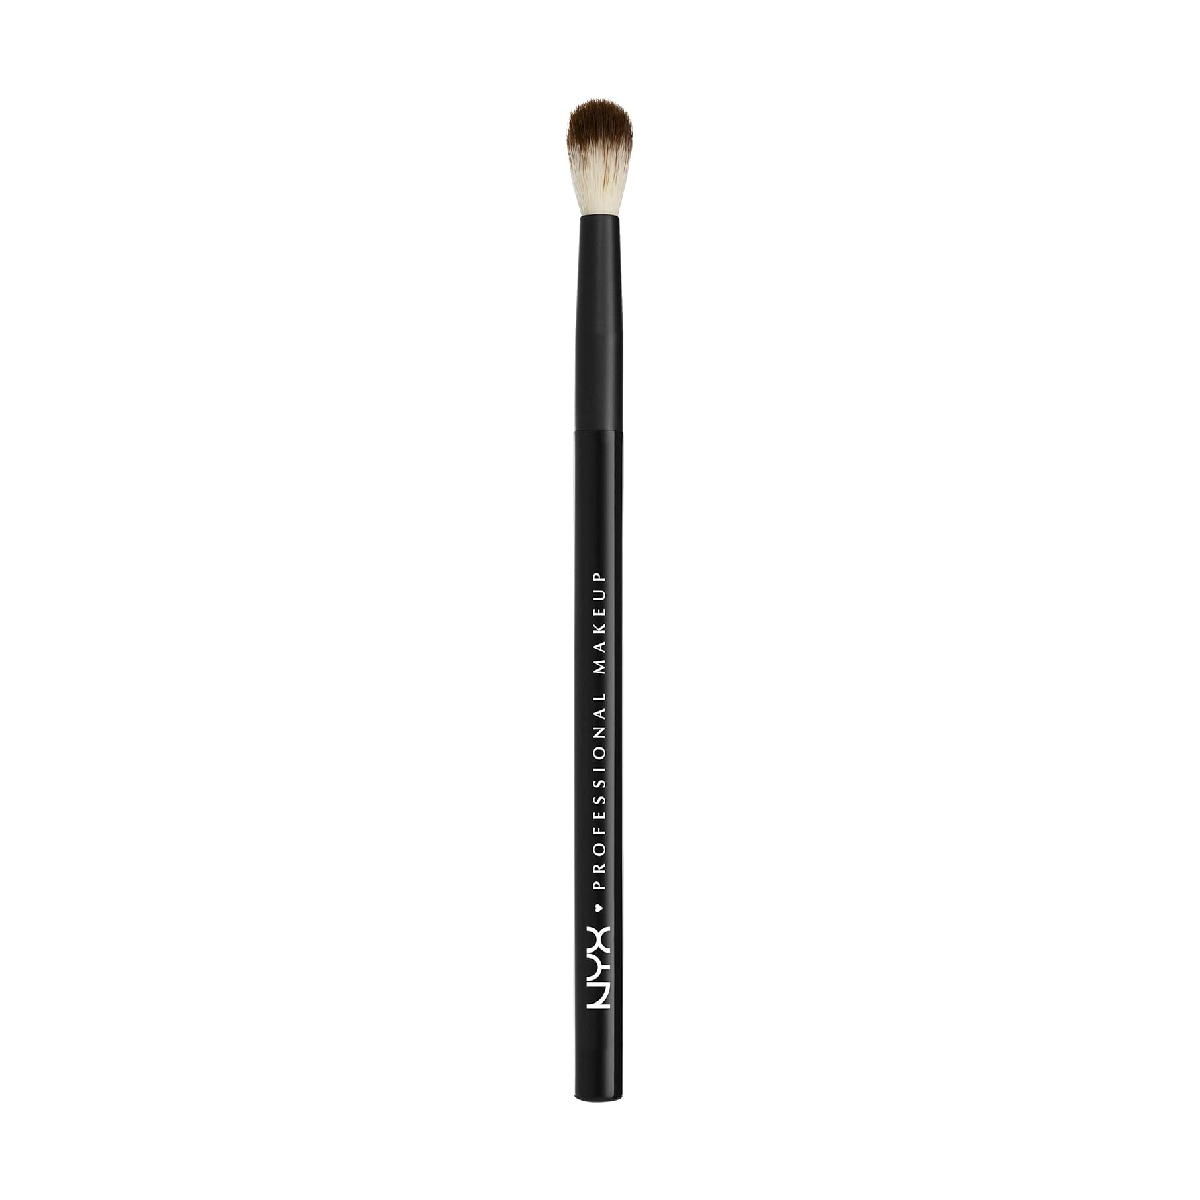 NYX Professional Makeup Pro Blending Brush - a makeup blending brush on a white background.